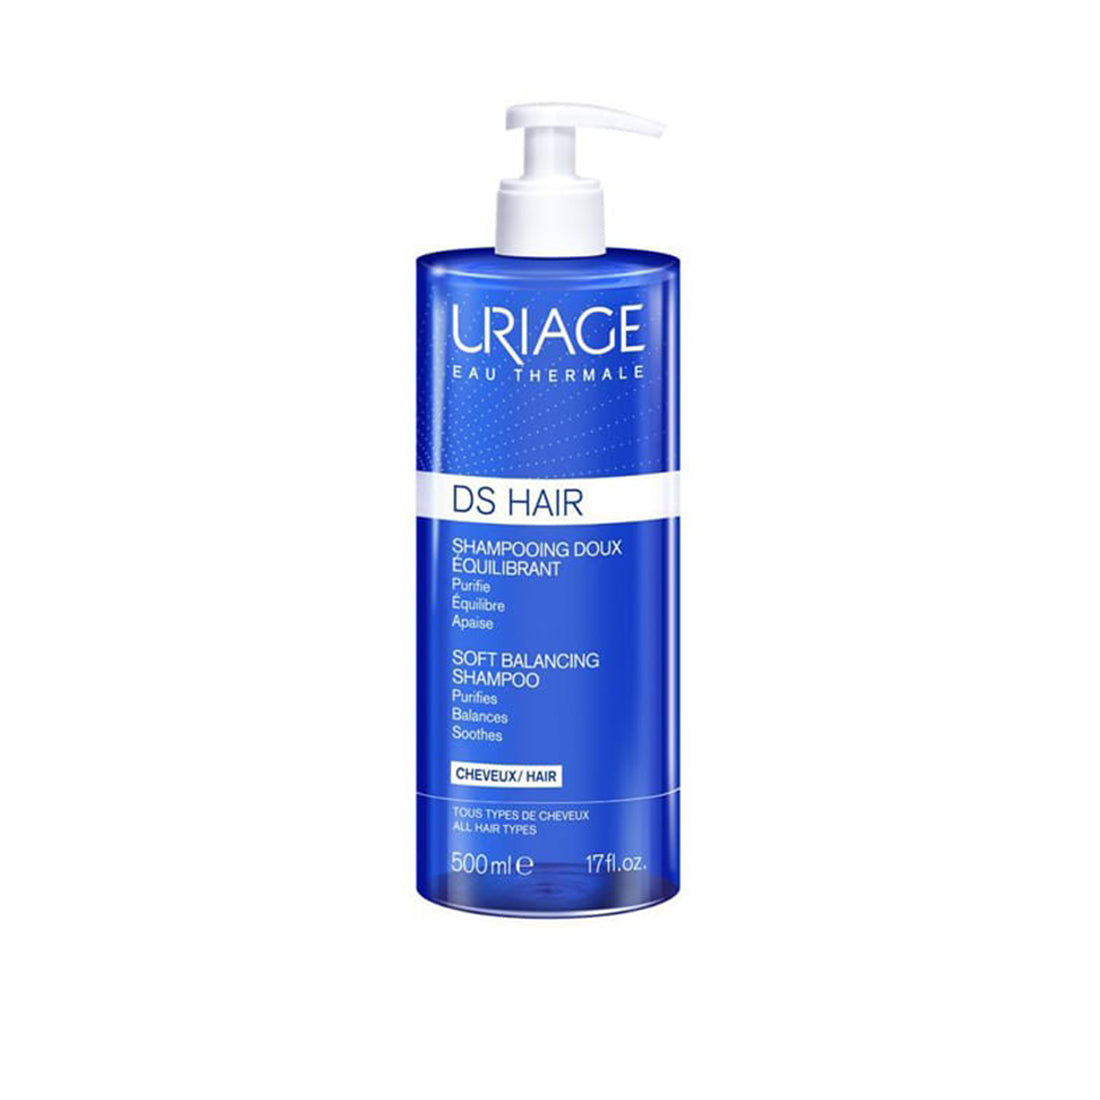 Uriage D.S. Hair Soft Balancing Shampoo 500ml (16.91fl oz)